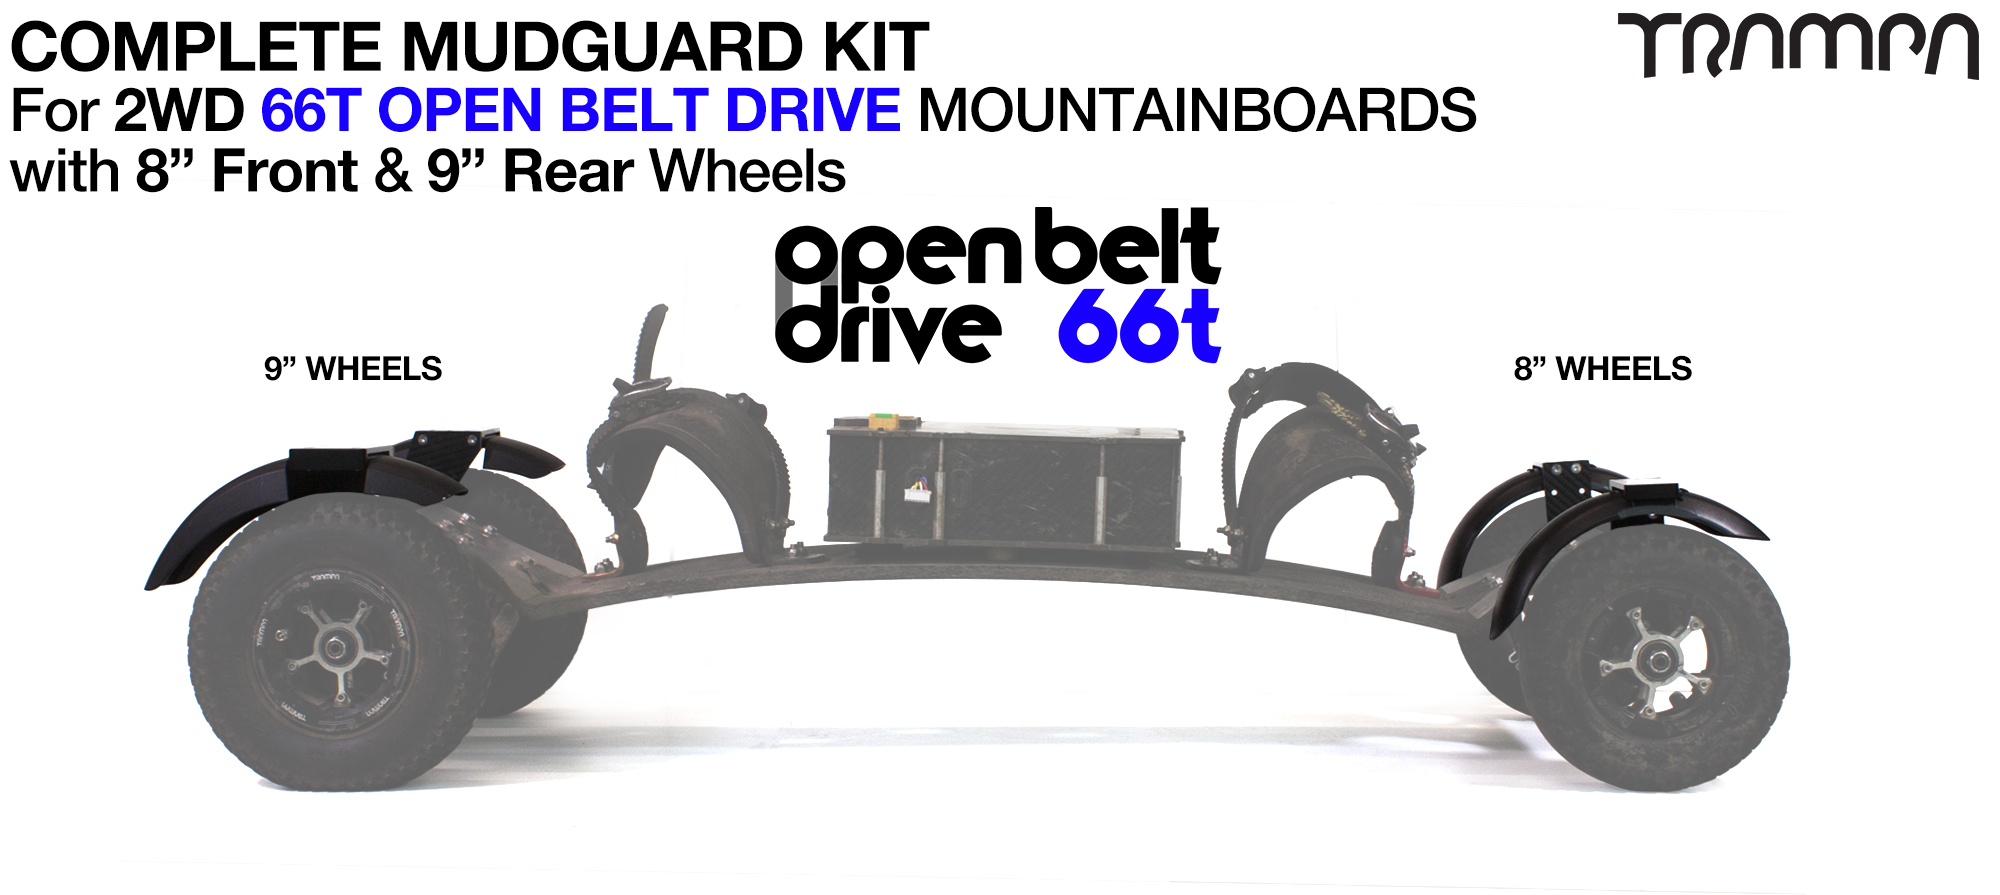 Full Mudguard Kit for 2WD 66T OPEN BELT DRIVE Mountainboards - 8" & 9" Wheels 